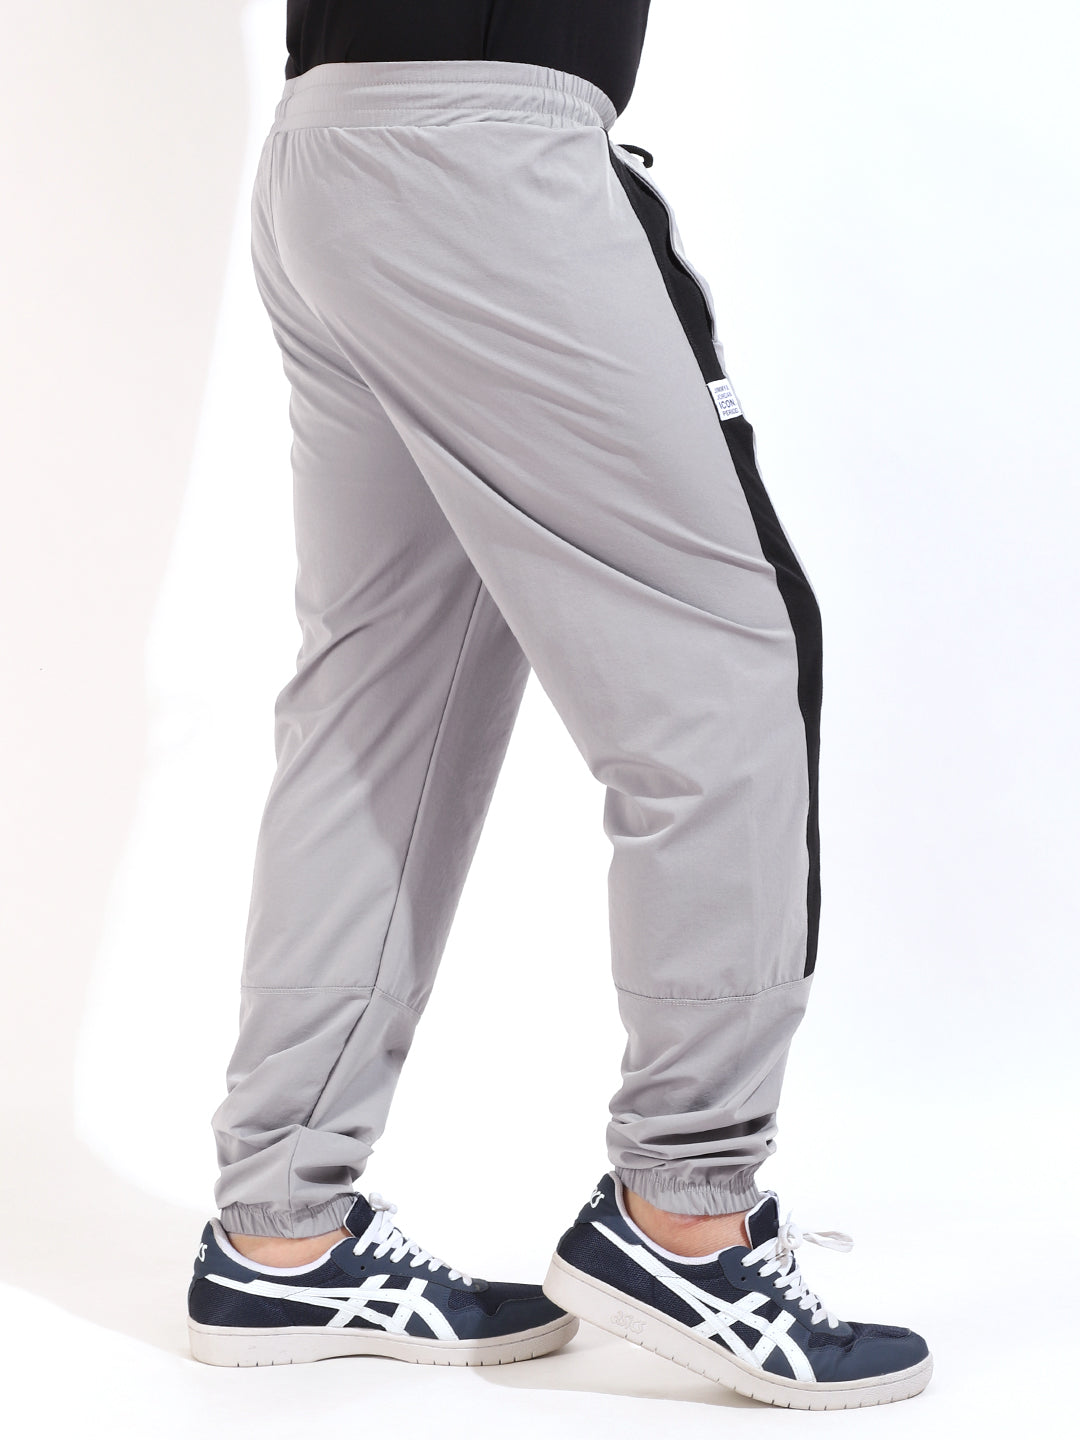 Nike Black And White Logo Track Pants In Grey | ModeSens | Black nikes, Nike  clothes mens, Black and white logos